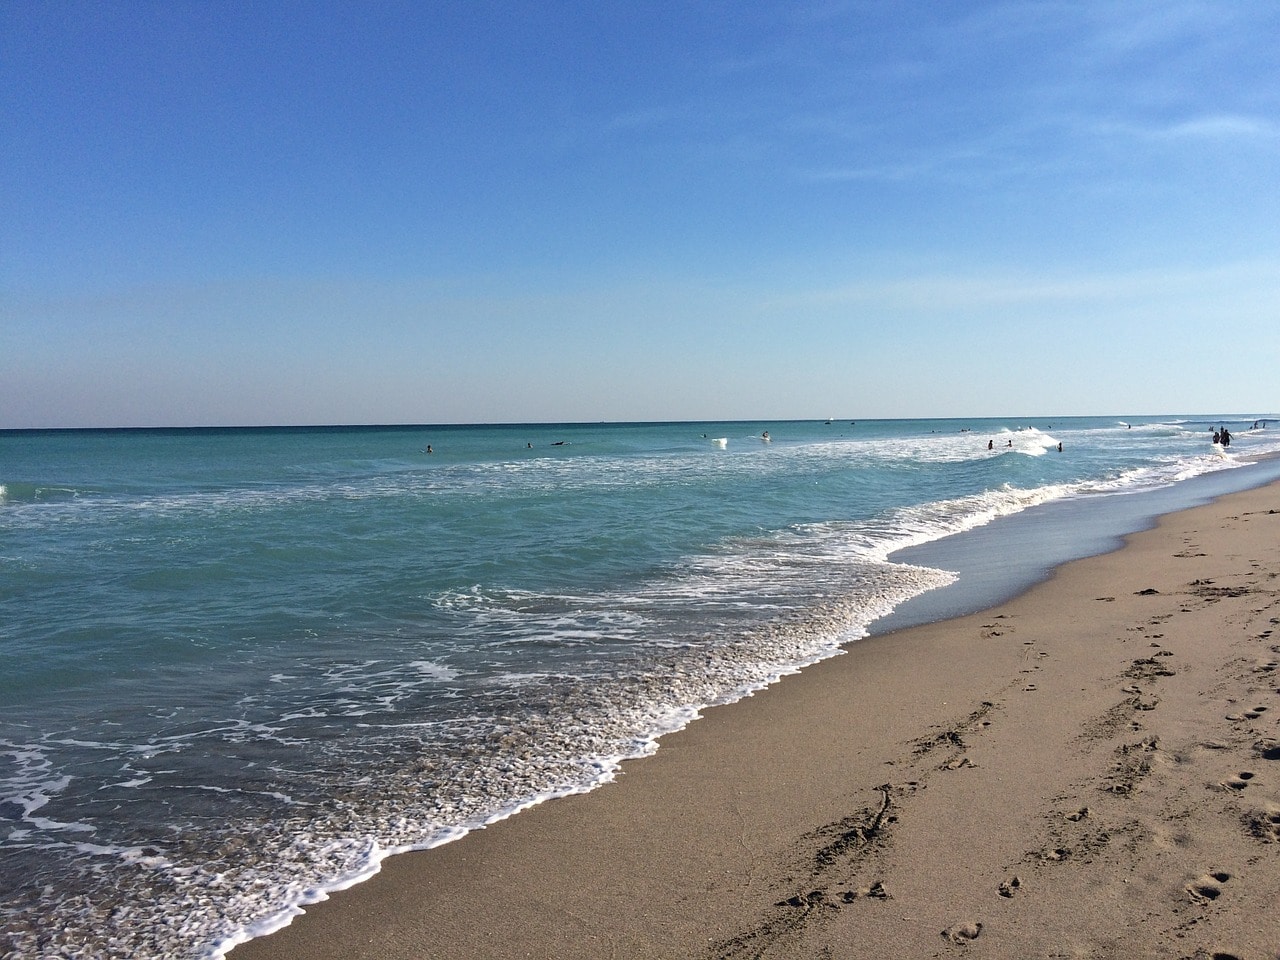 Bark Beach at Boca Raton, Florida, USA - a dog beach near Fort Lauderdale